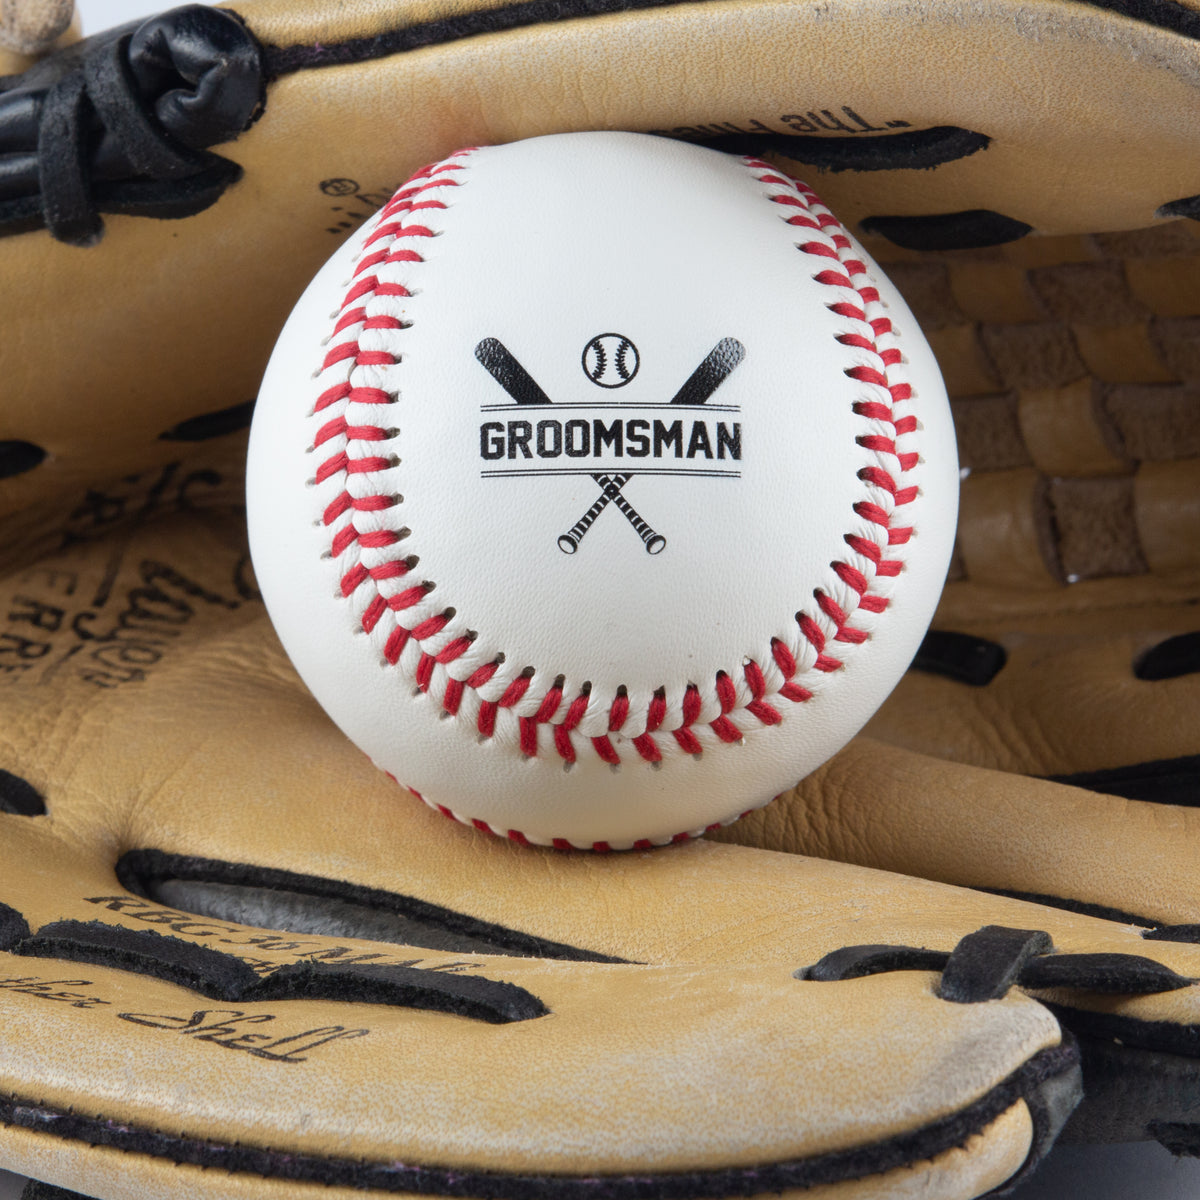 Printed Baseball in Glove with Groomsmen Design 